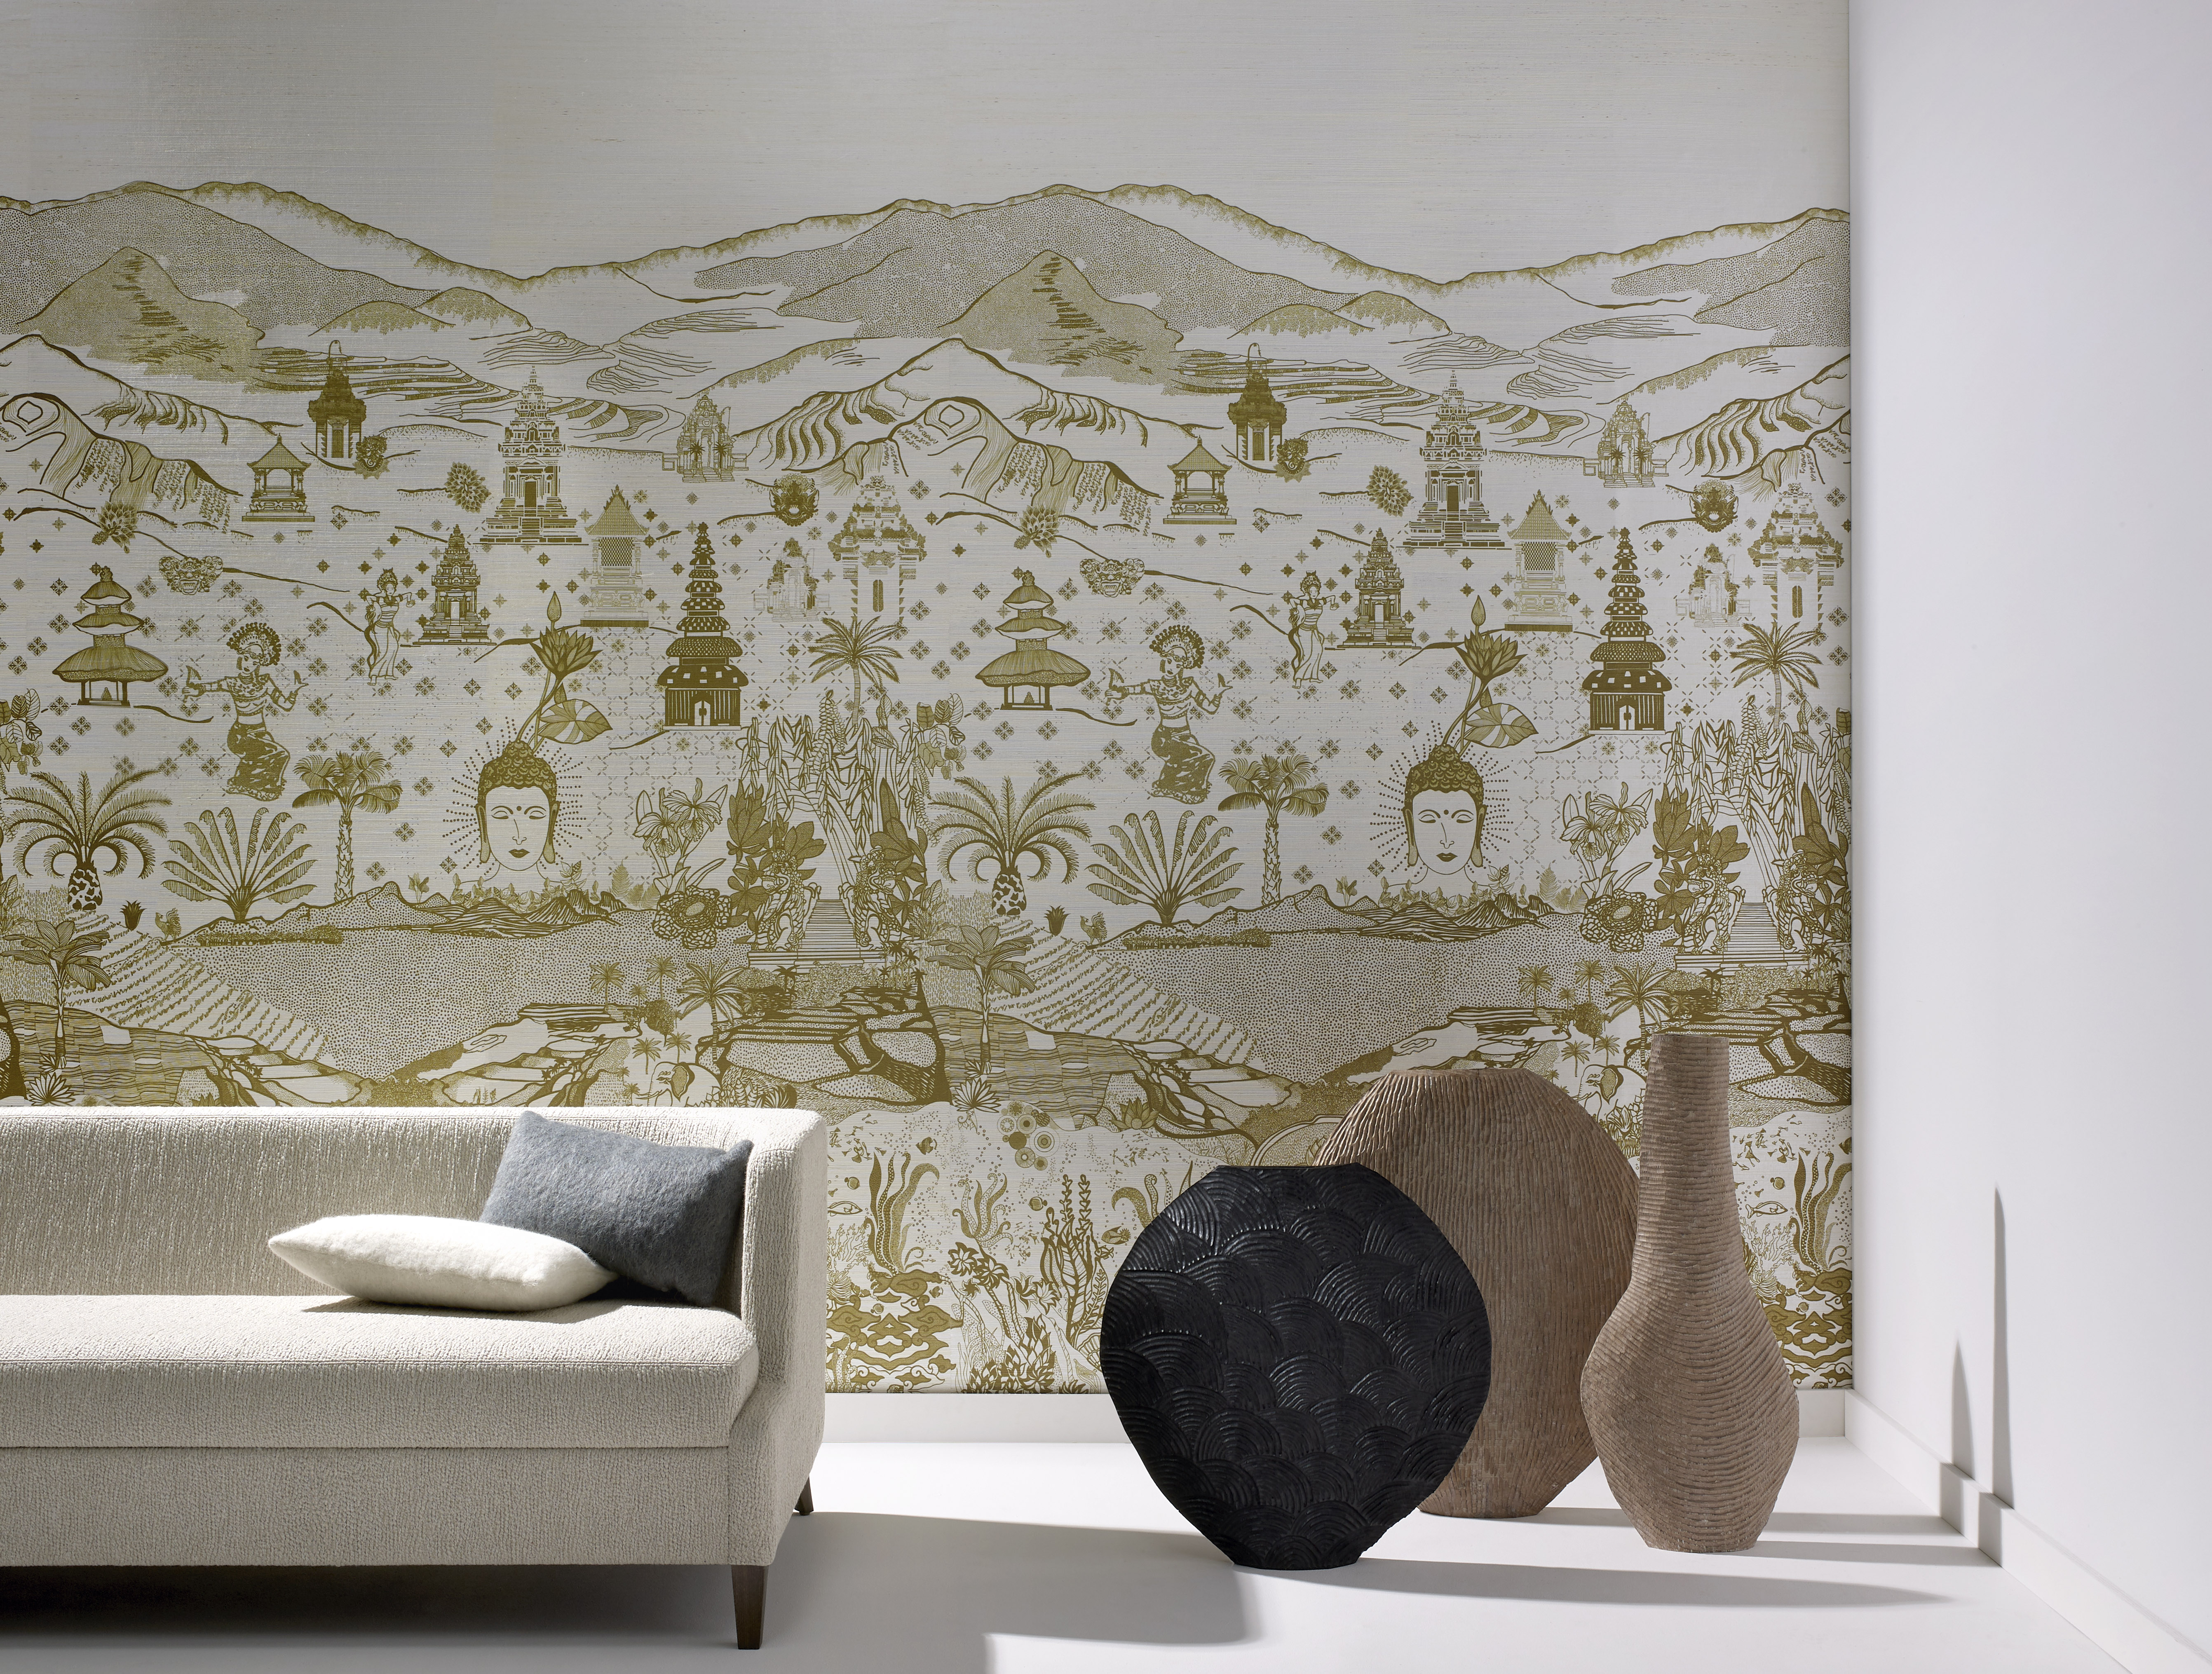 Pierre Frey wallpaper Meditation golden and offwhite wallcovering Padang Padang